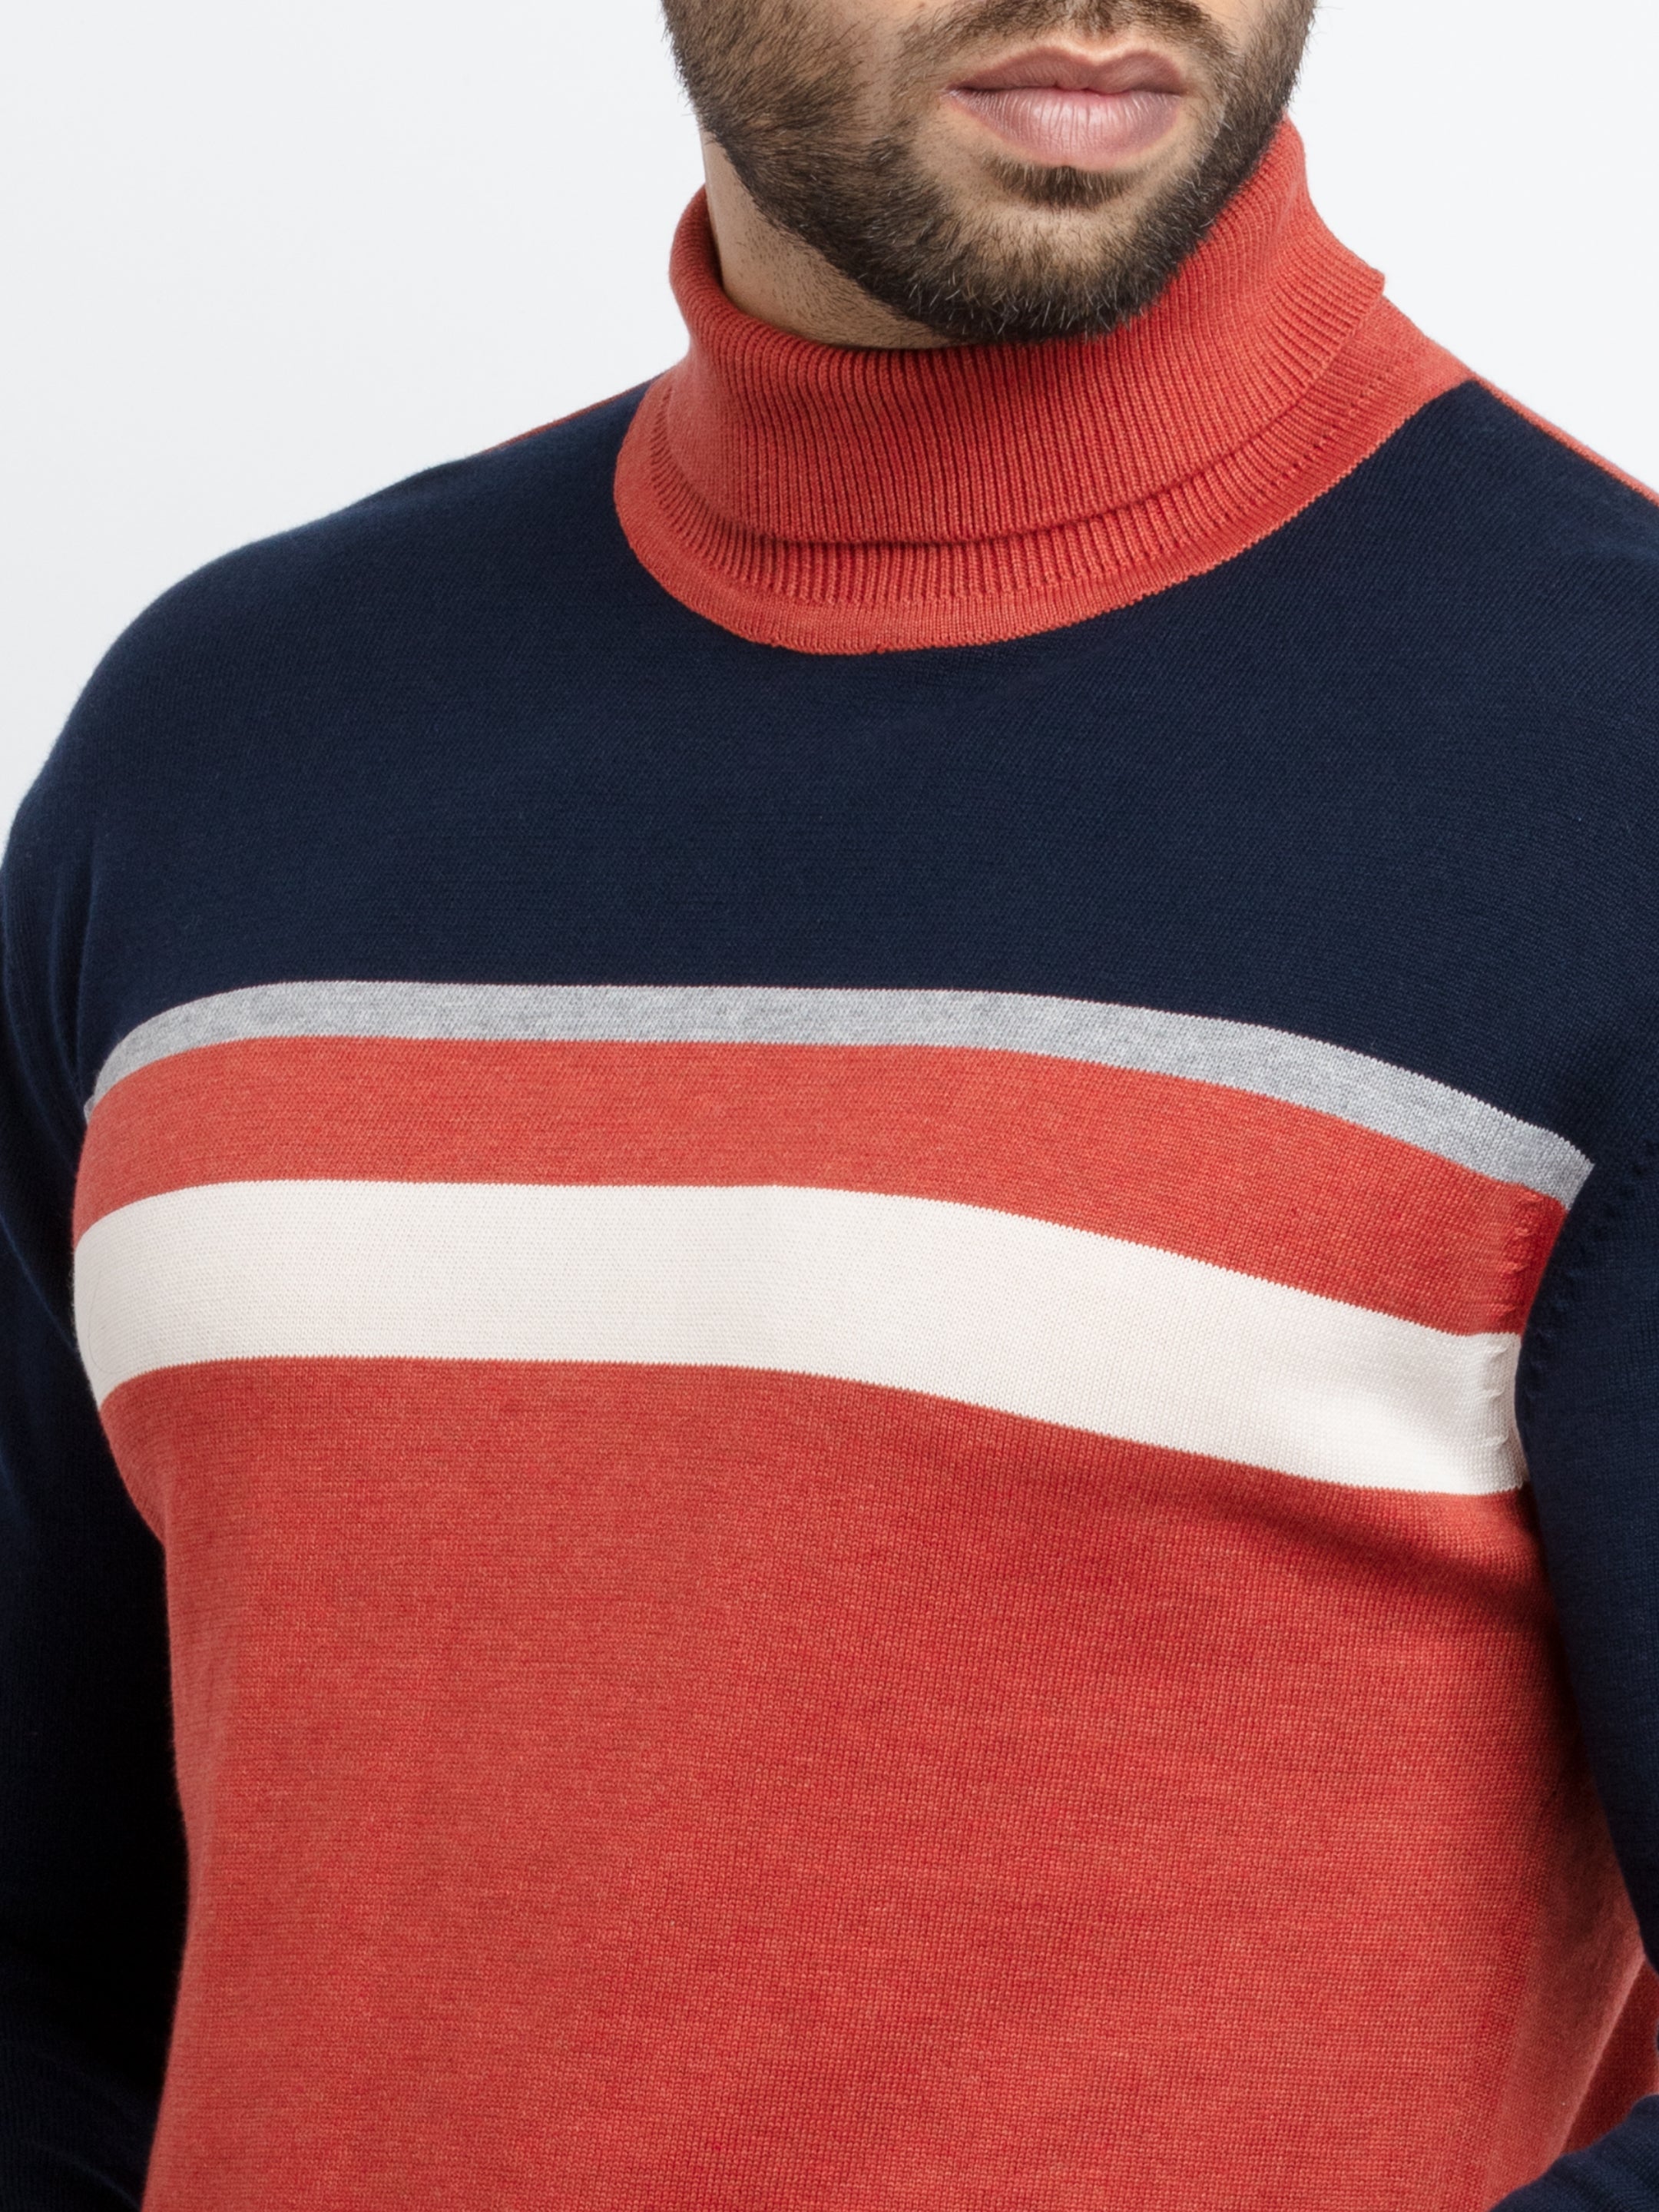 Mens Striped Turtle Neck Sweater